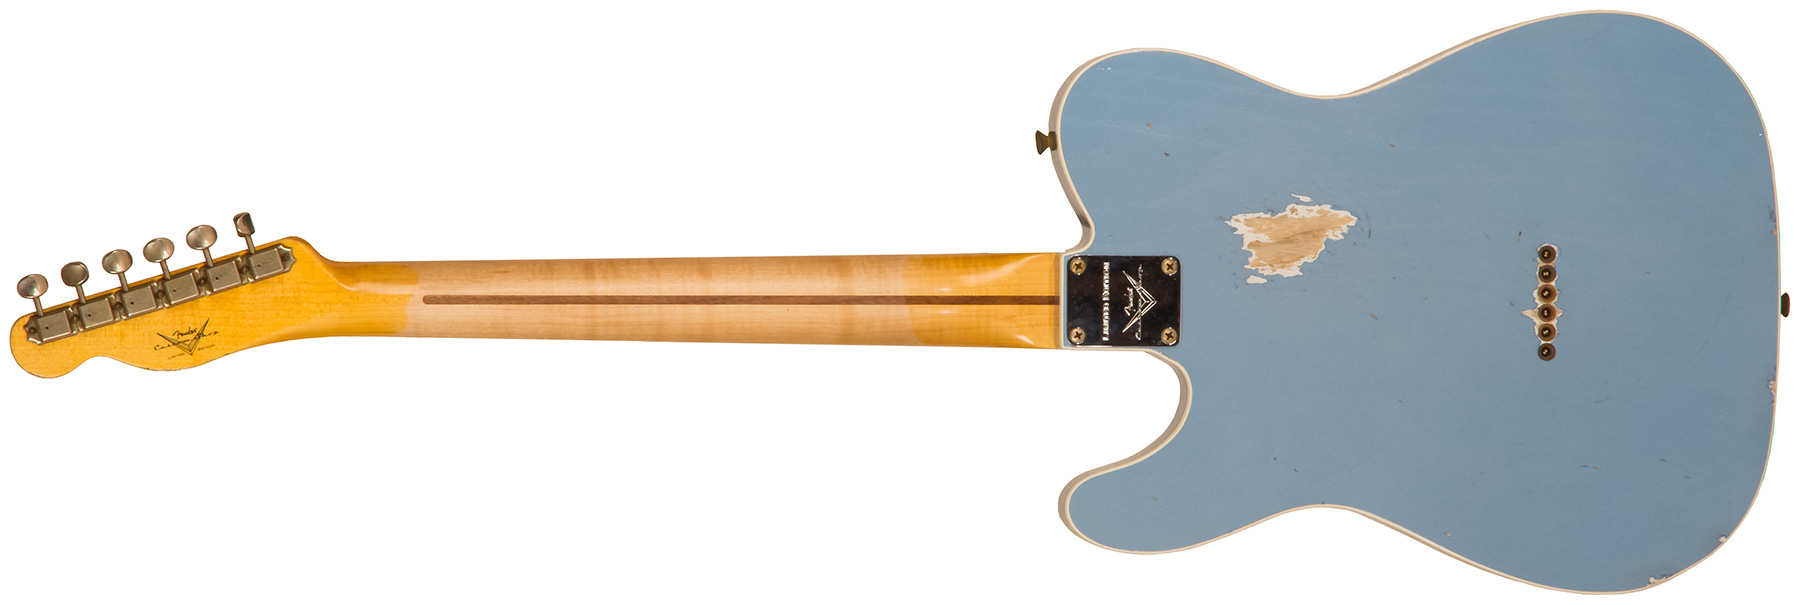 Fender Custom Shop Tele Custom Tomatillo 2s Ht Mn #r110879 - Relic Lake Placid Blue - Tel shape electric guitar - Variation 1